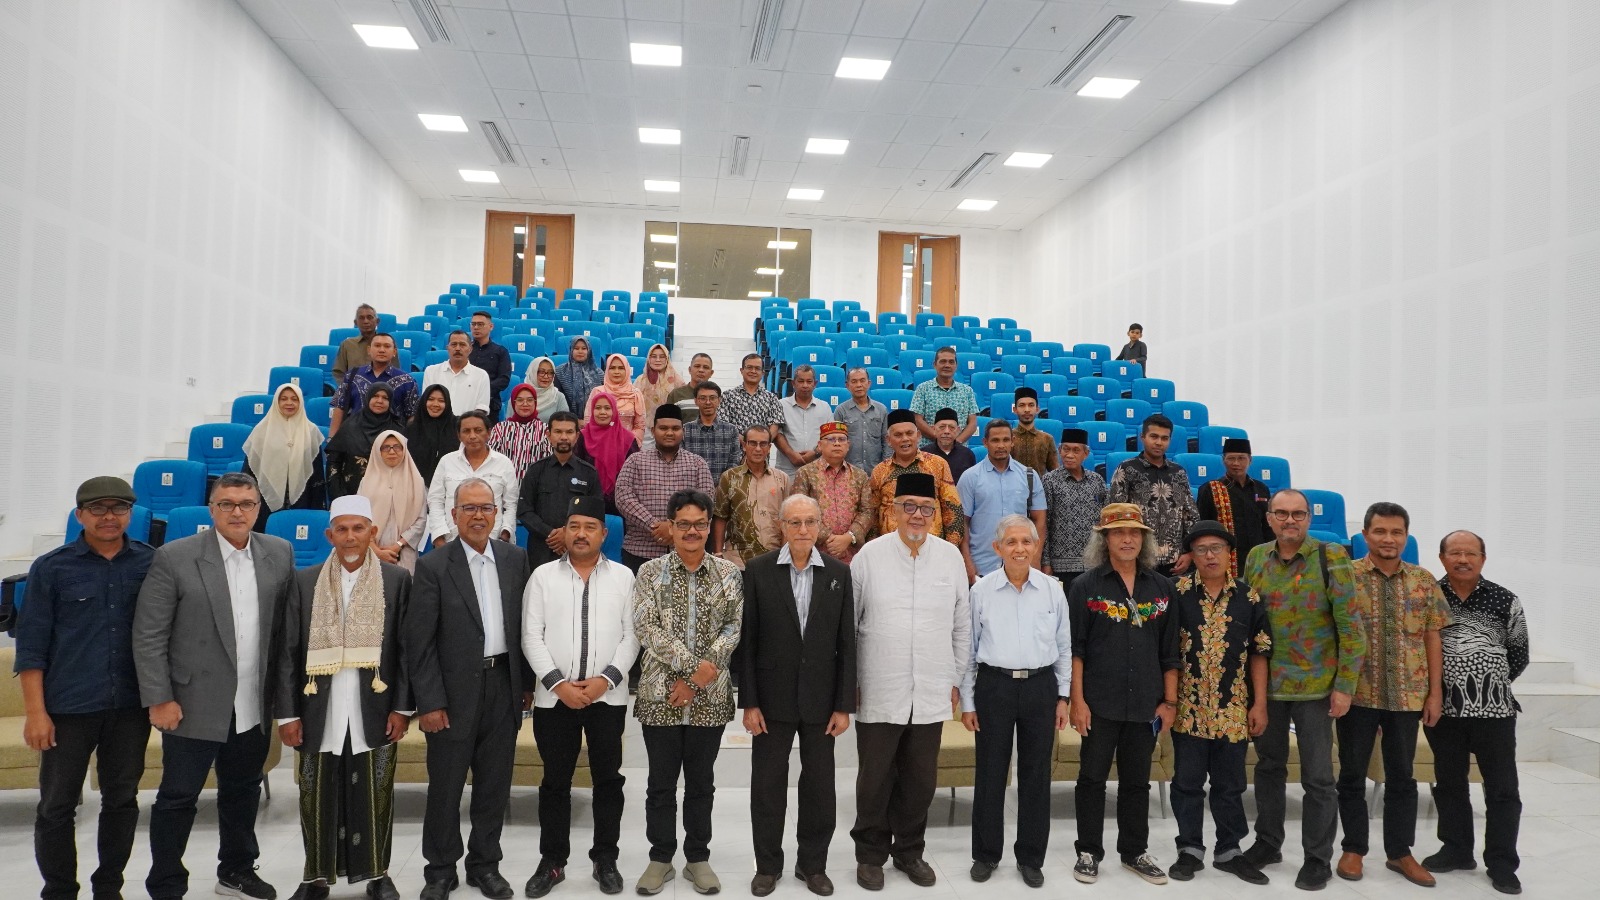 BAST Hadiri Kongres Peradaban Aceh II